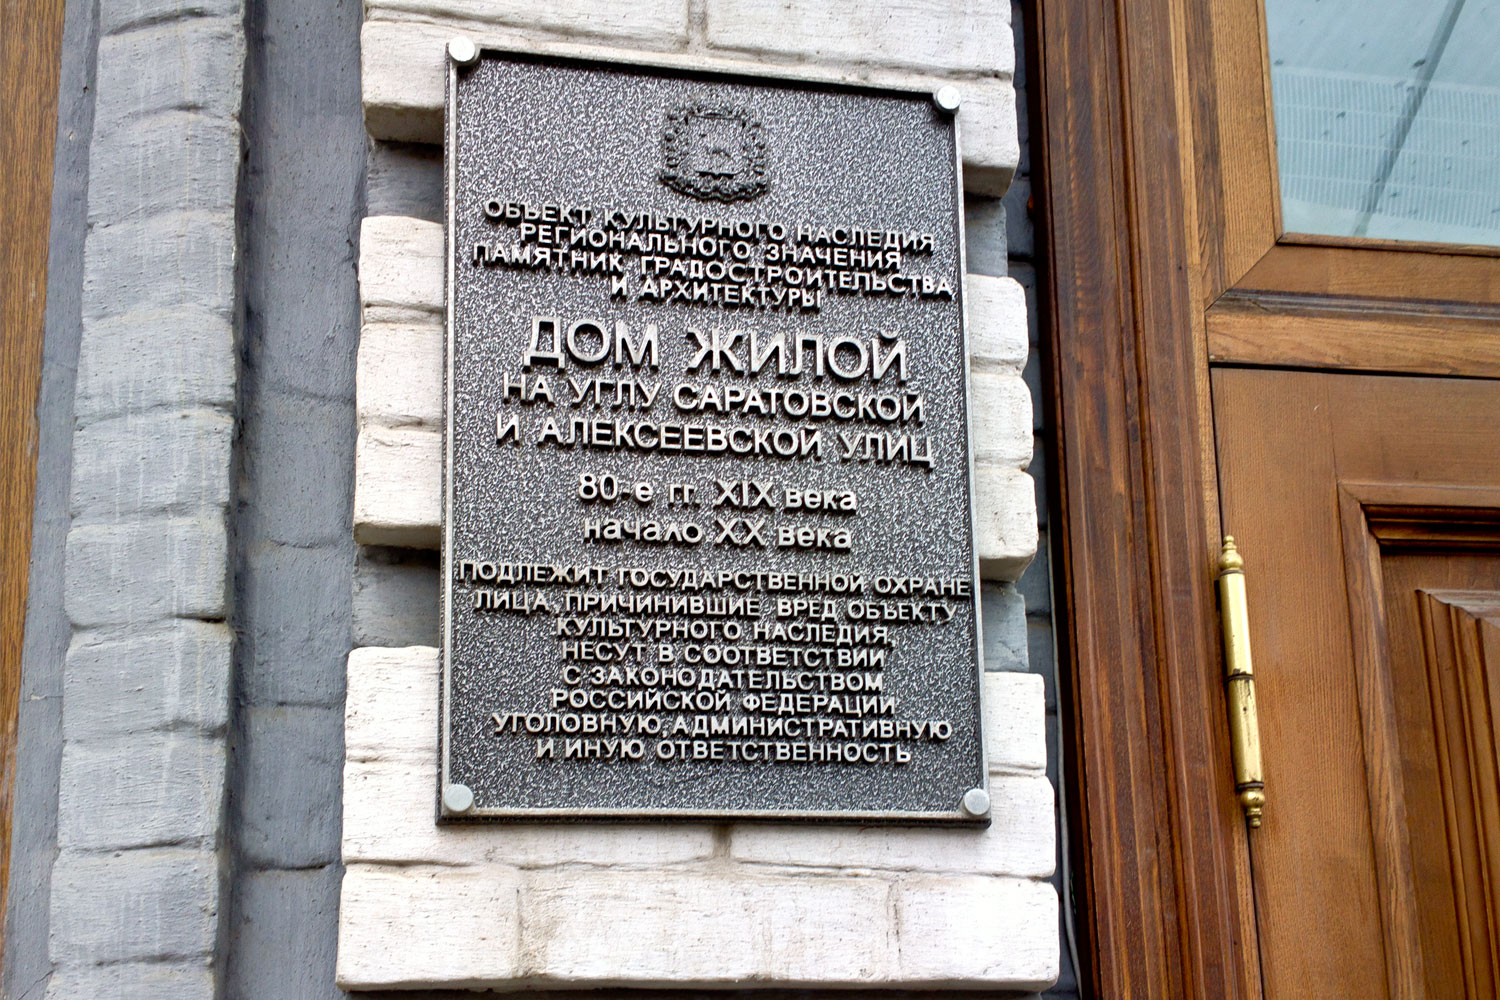 Samara, Красноармейская улица, 13 / Улица Фрунзе, 136. Samara — Protective signs